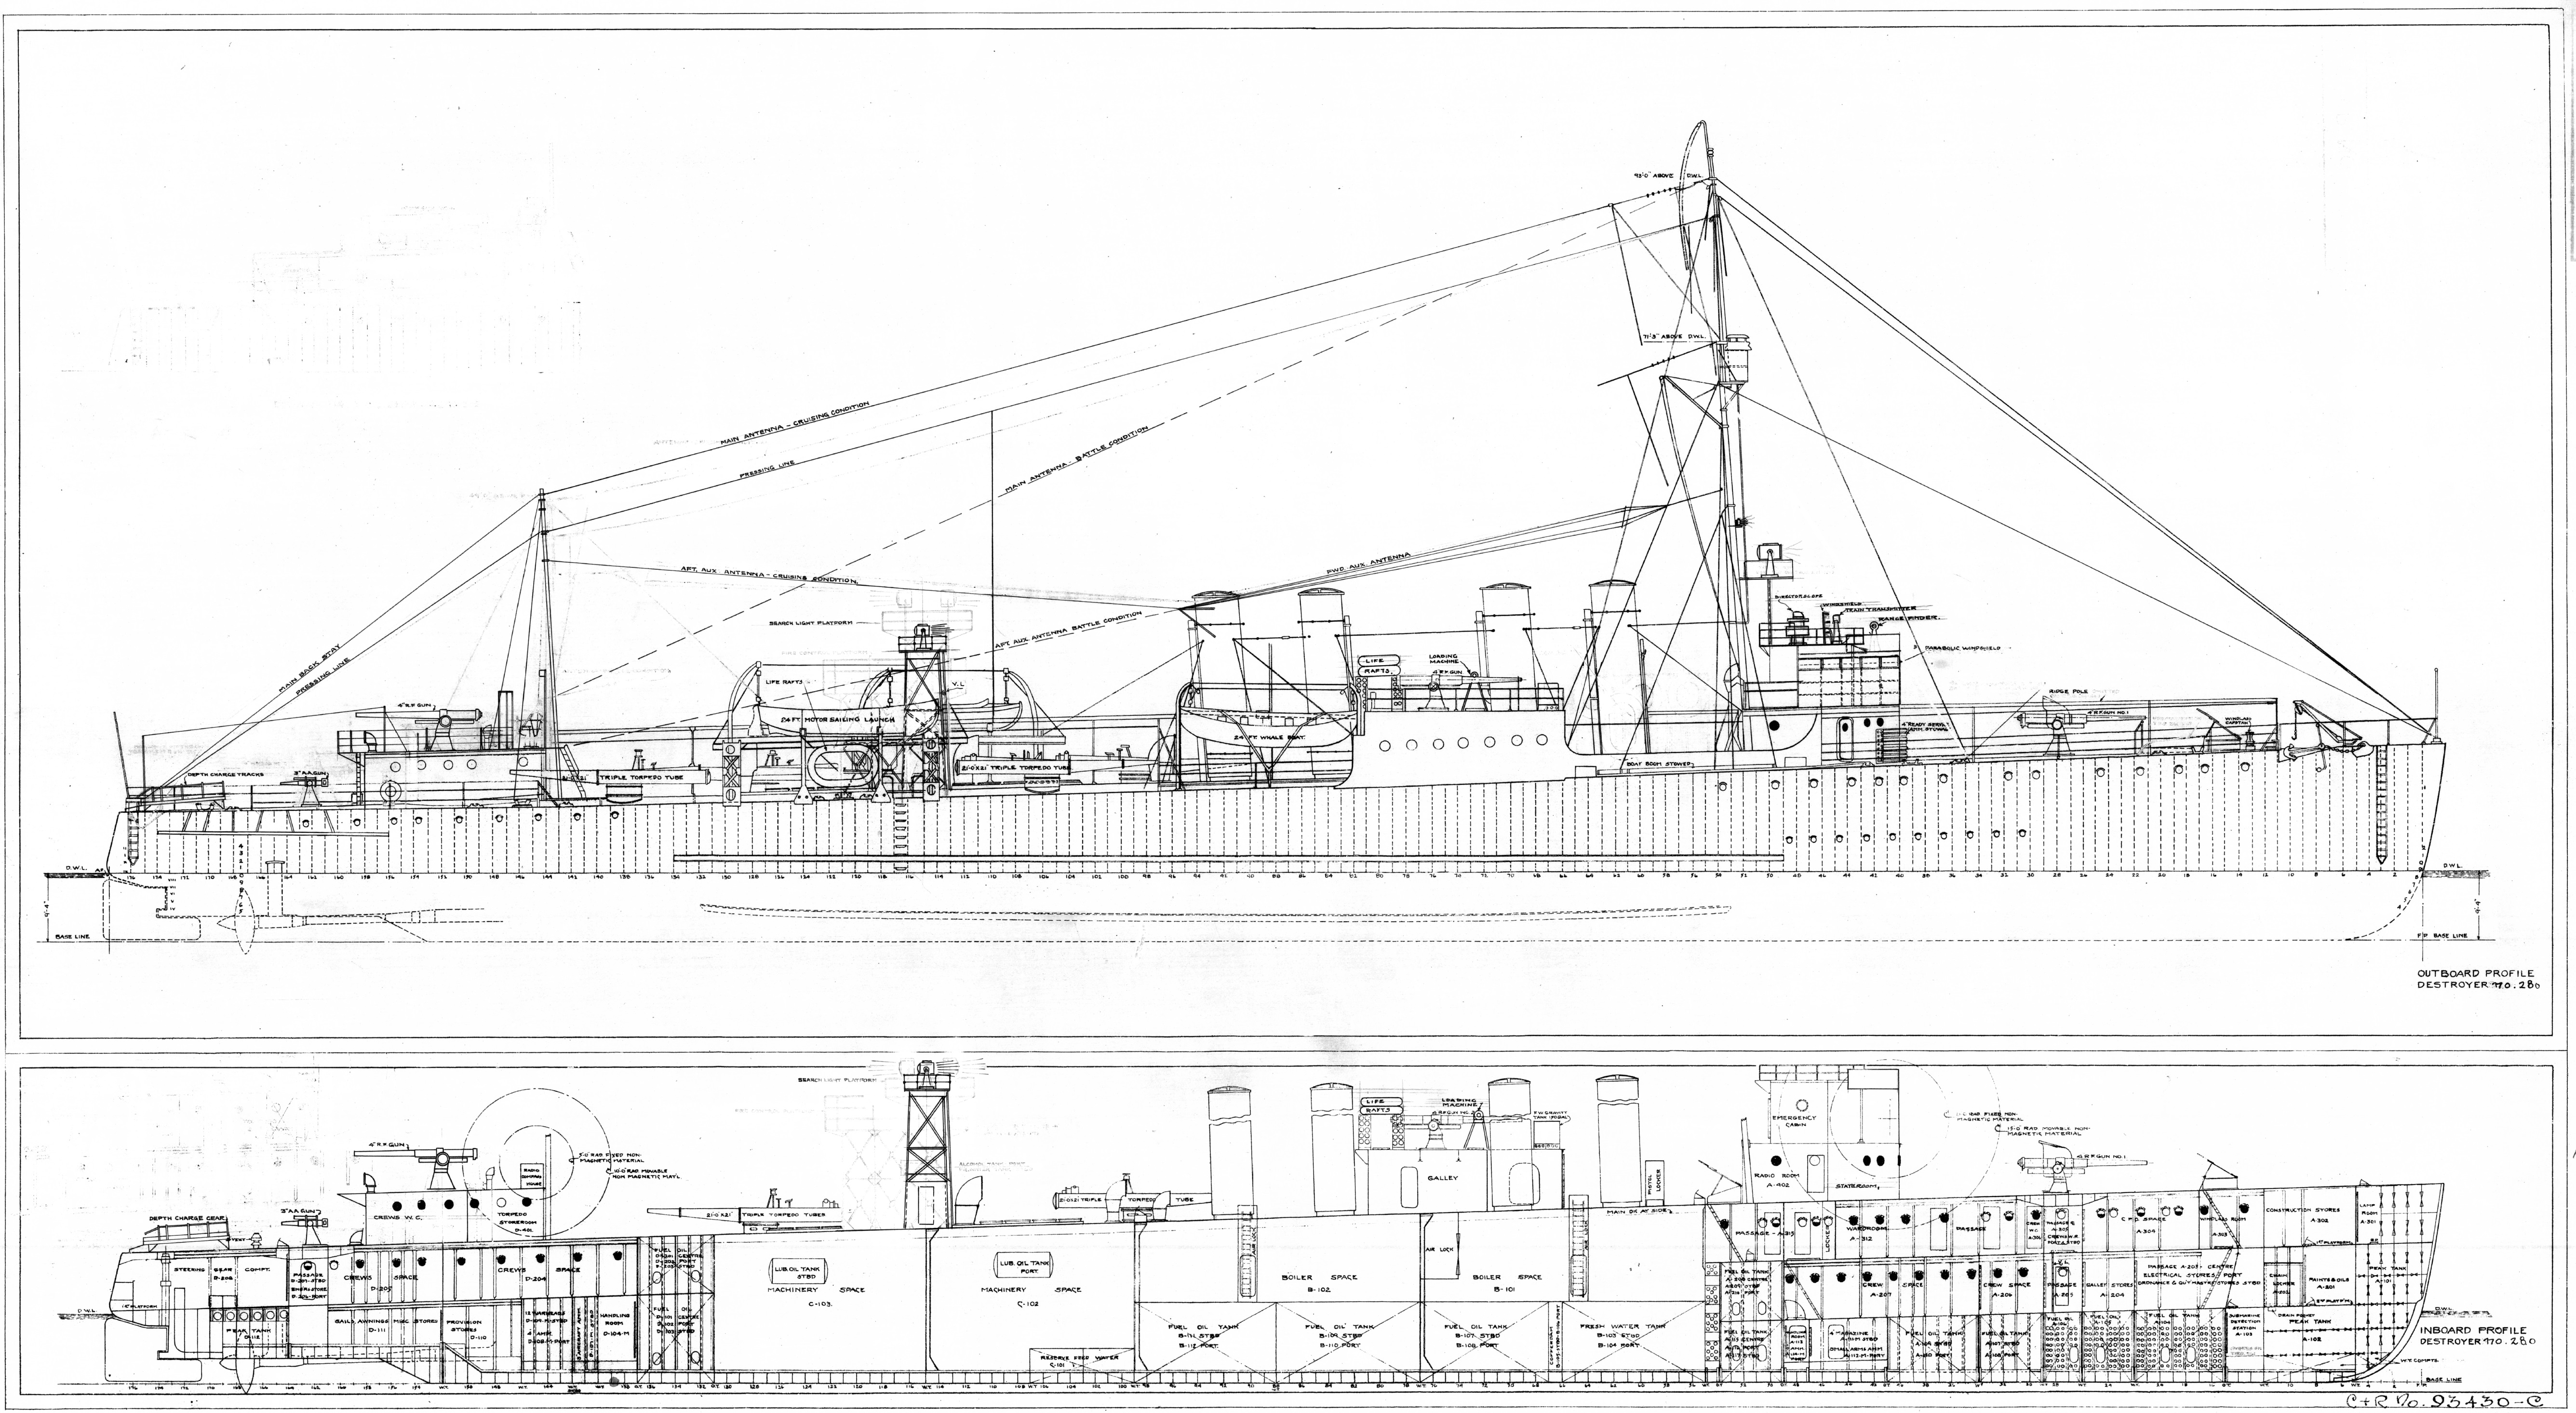 Profile plans for the Clemson-class flush-deck four-stack destroyers